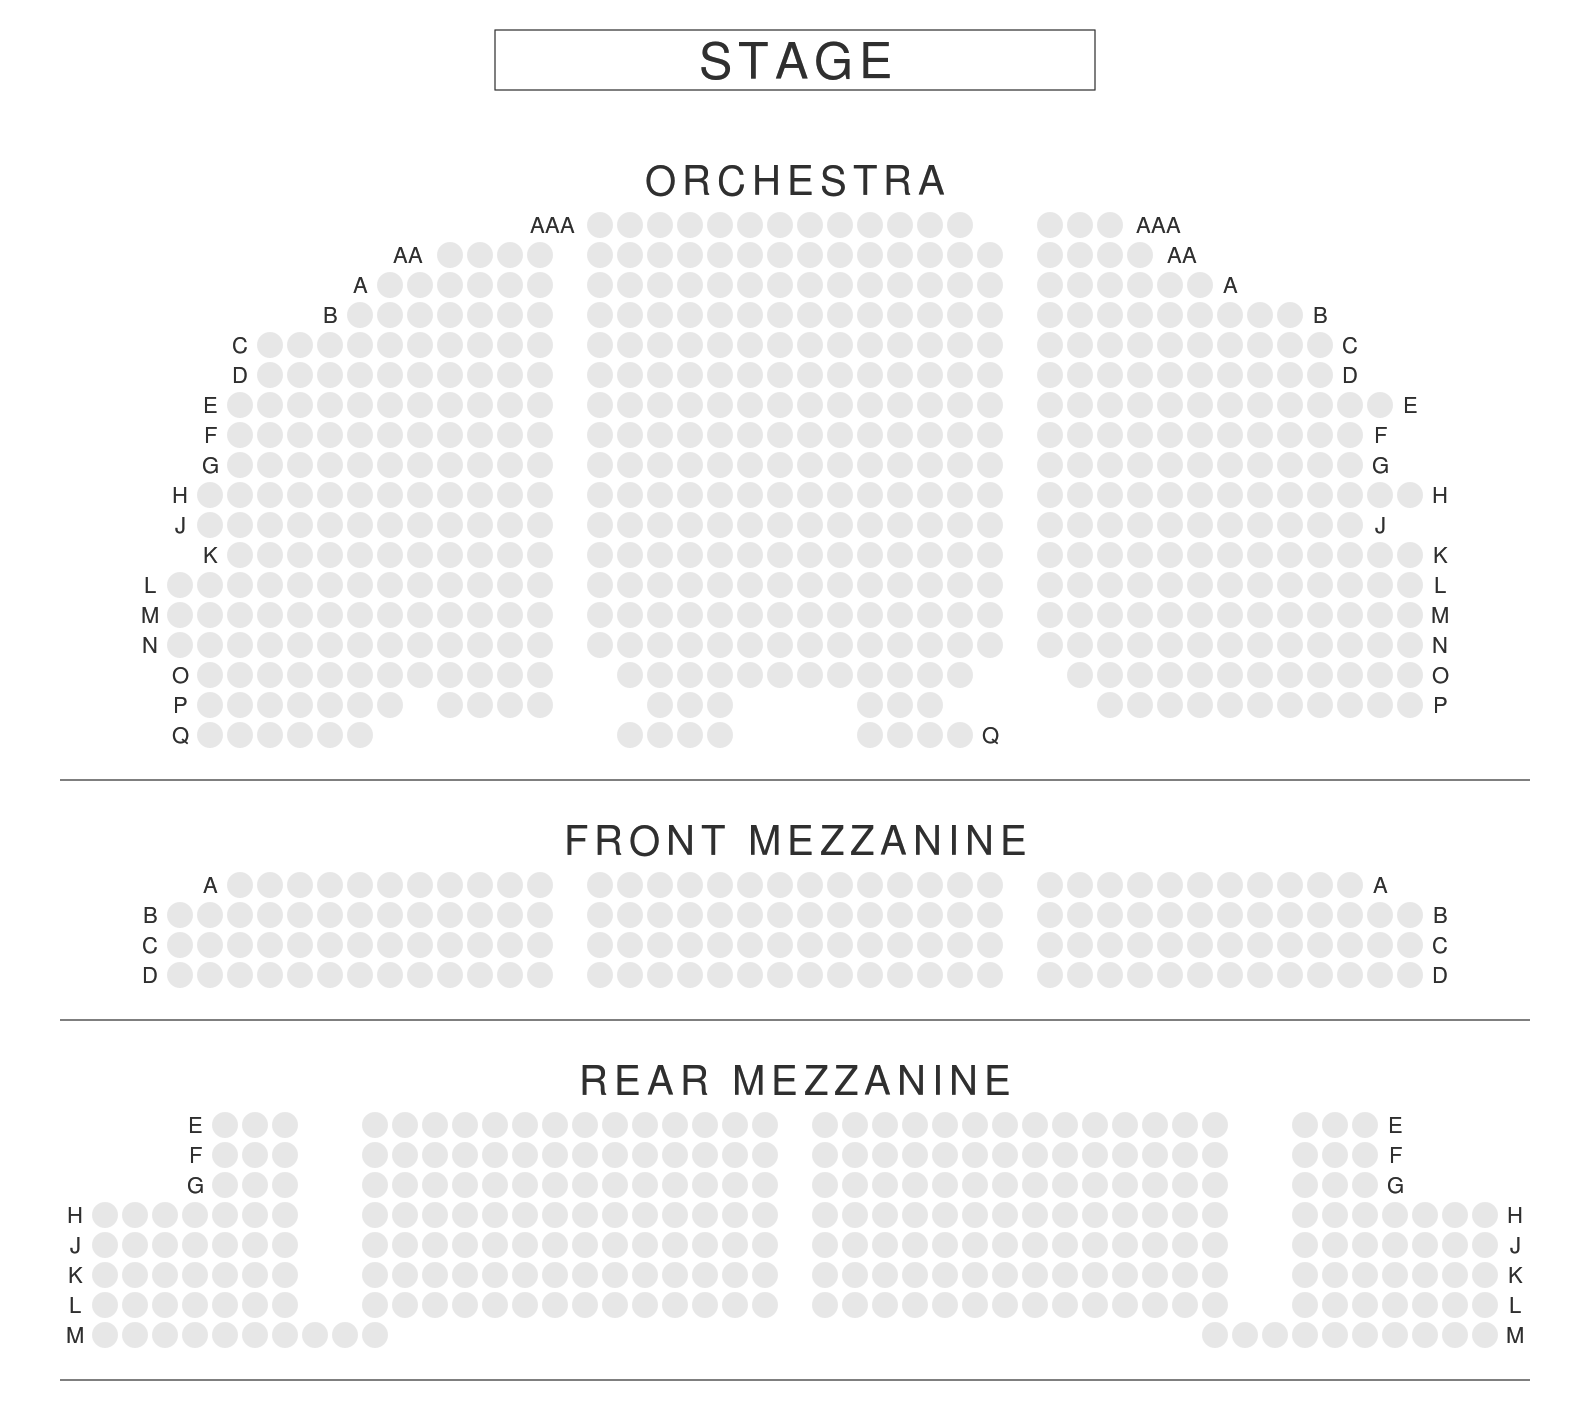 brooks-atkinson-theatre-seating-plan-new-york.png